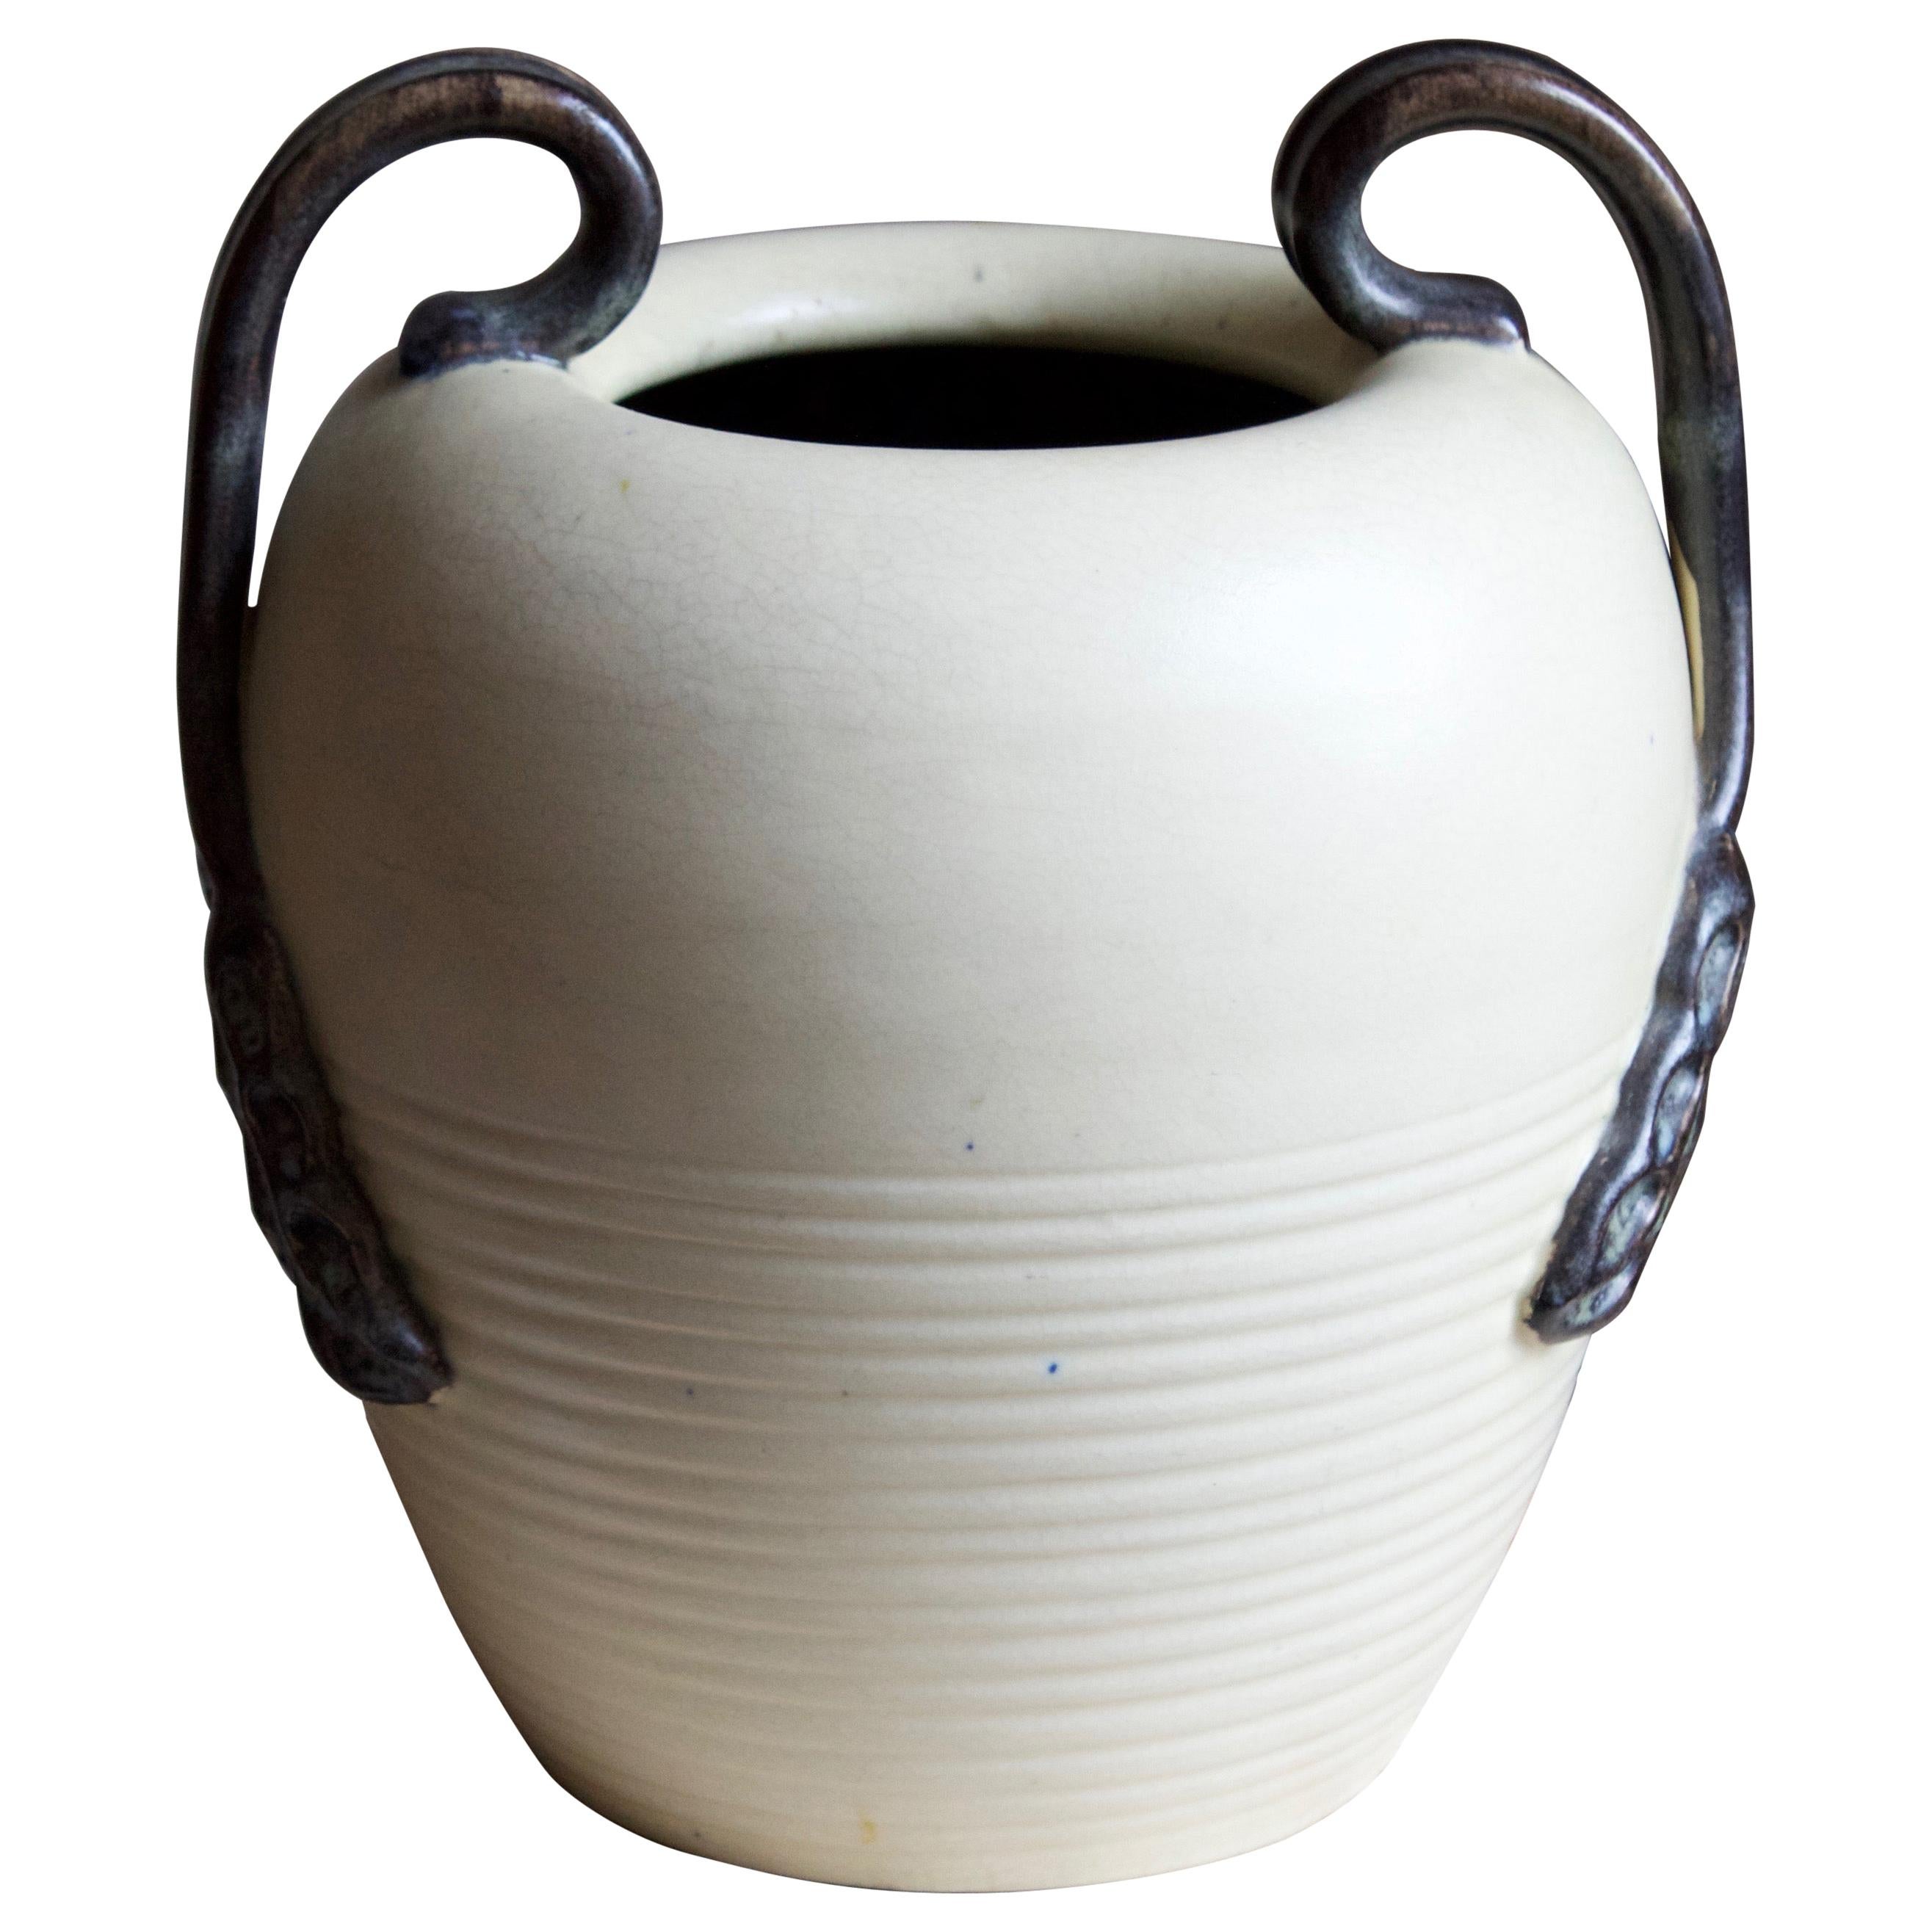 Bo Fajans Vases and Vessels - 29 For Sale at 1stDibs